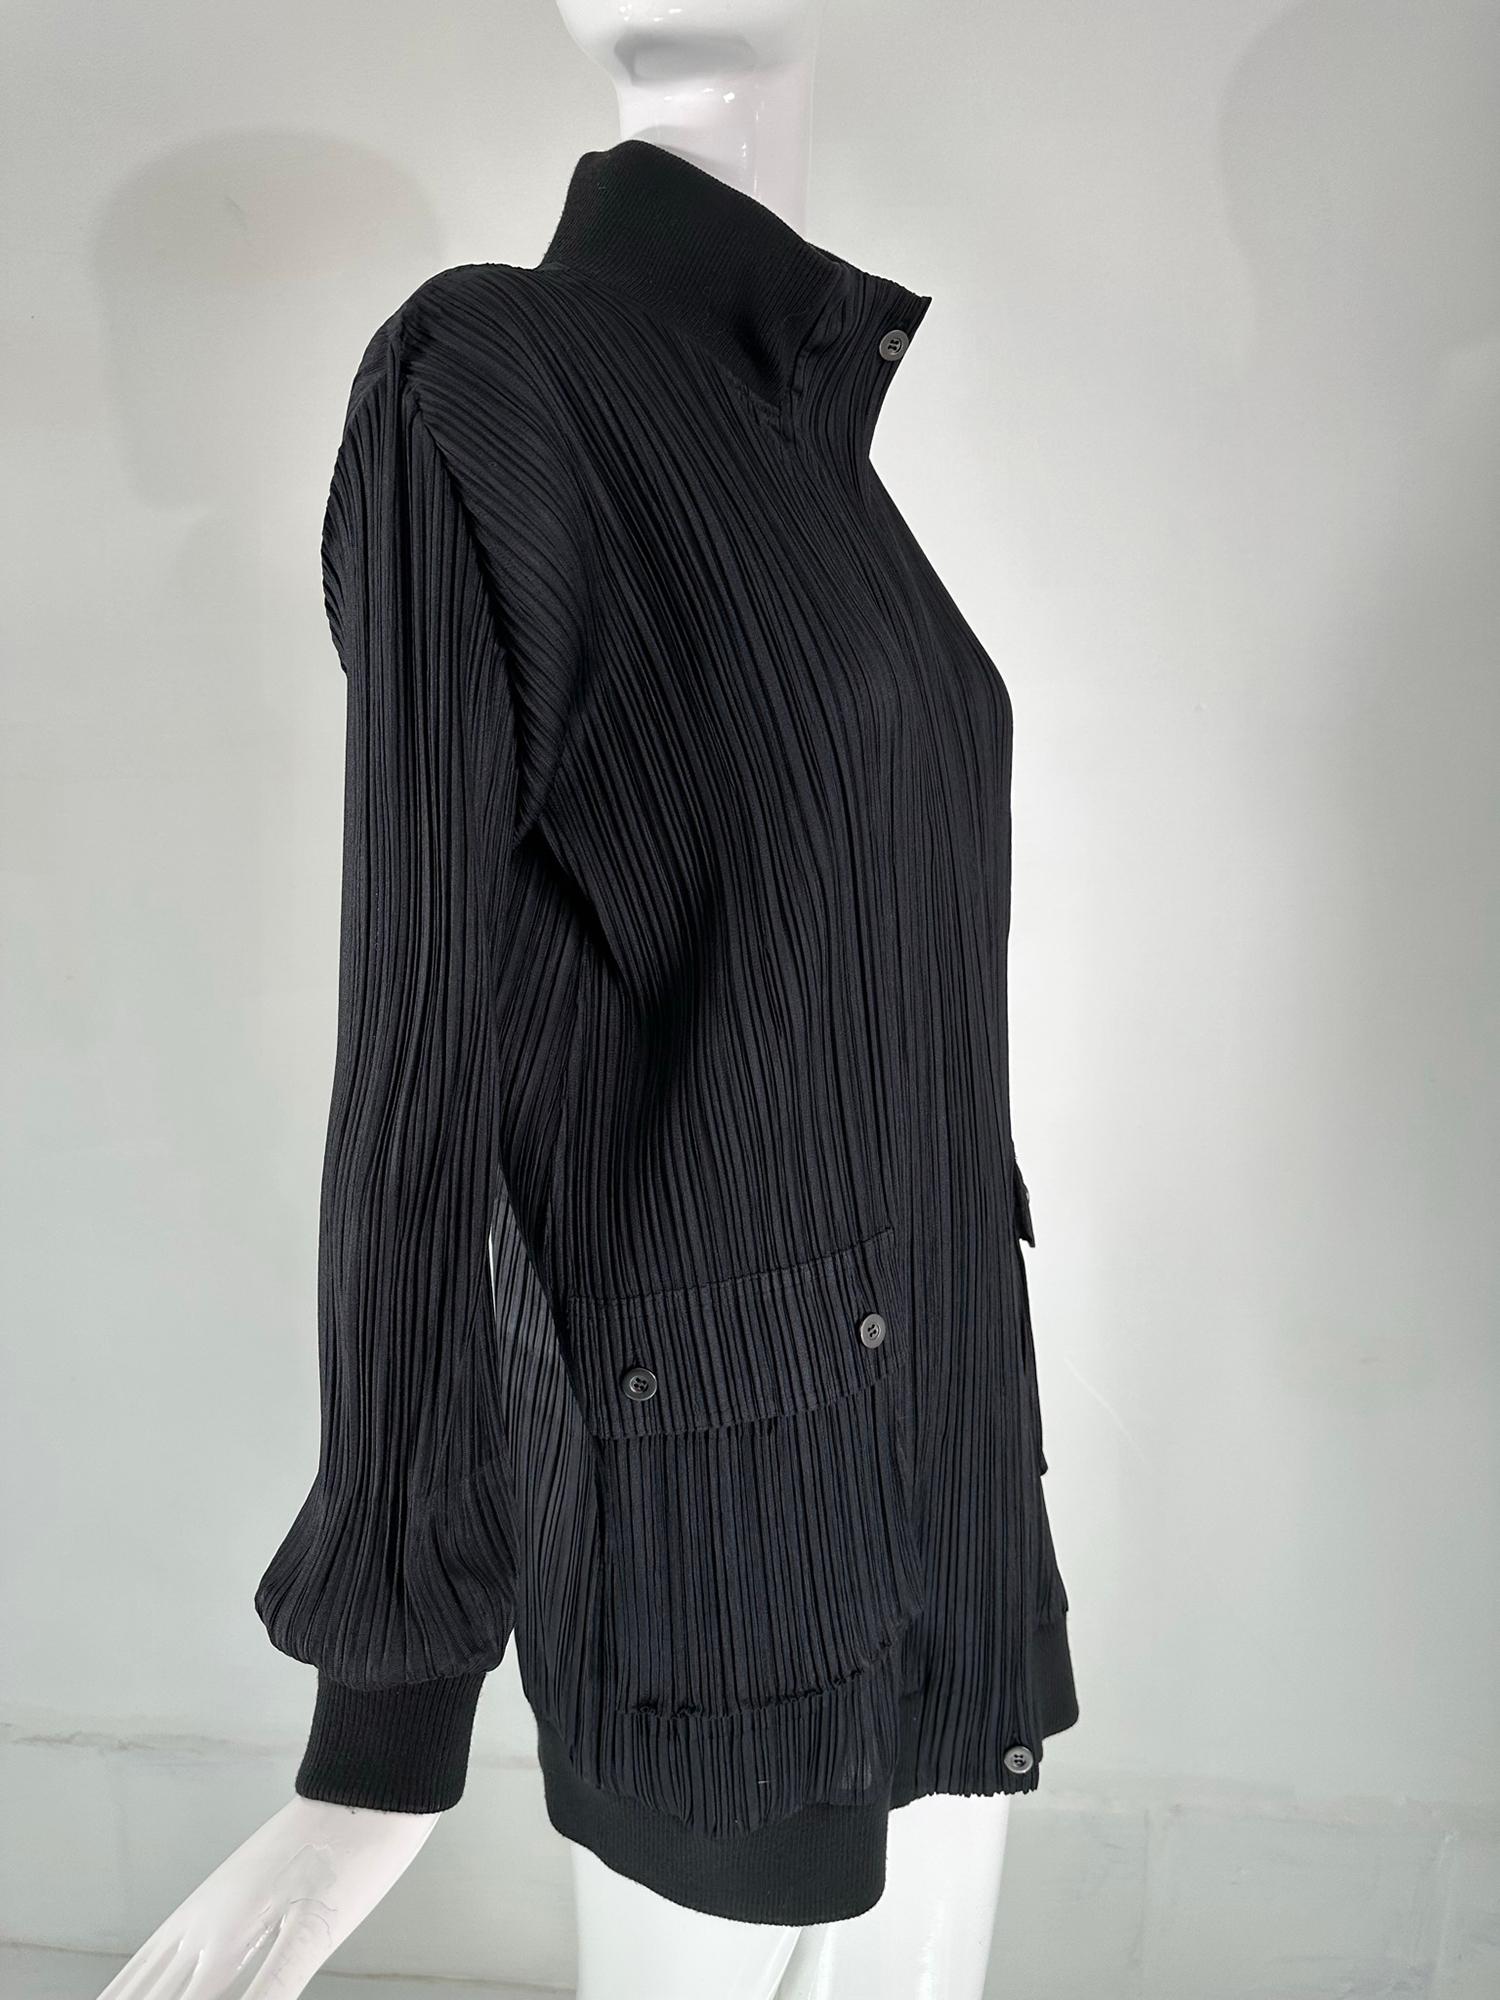 Issey Miyake Pleats Please Black Funnel Neck Hidden Zipper Front Long Jacket 3 For Sale 7